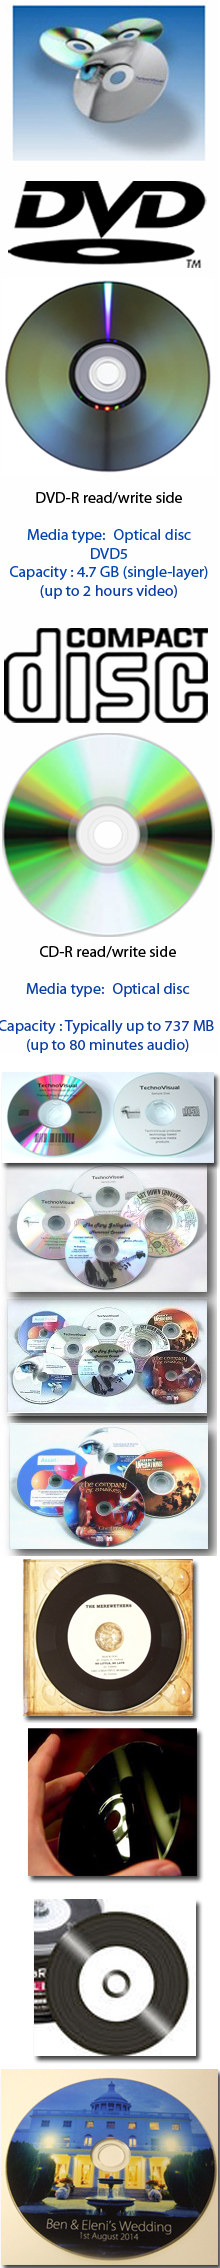 TechnoVisual CD & DVD Duplication Services